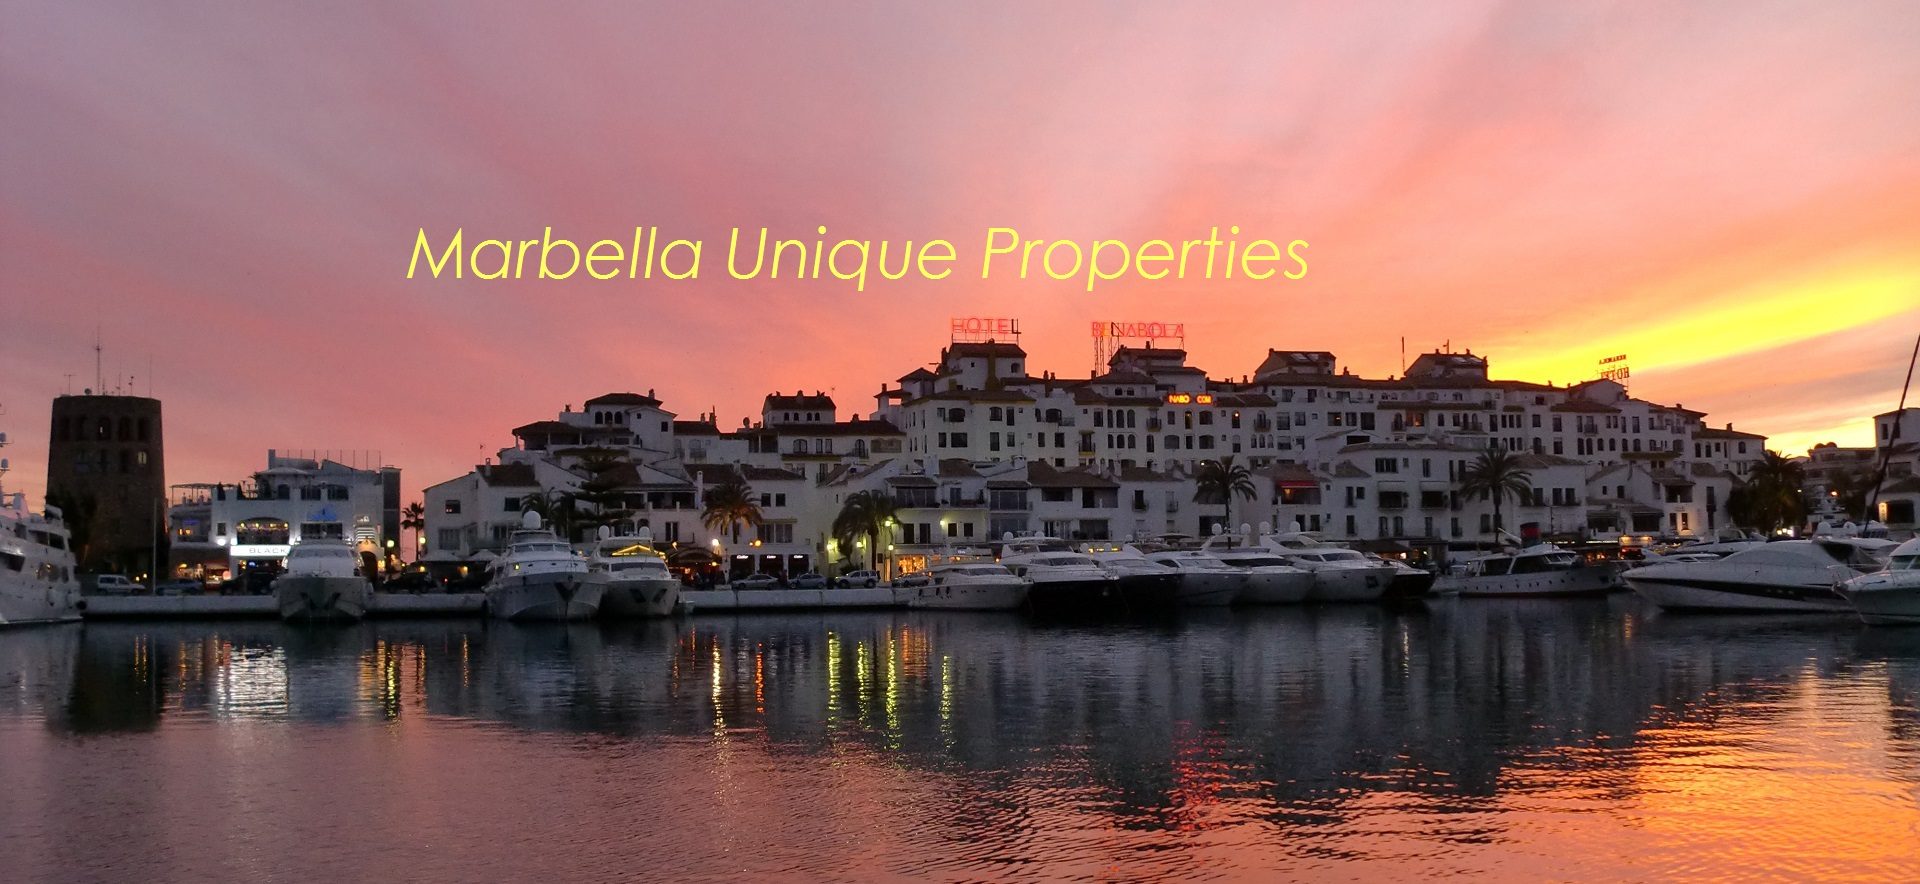 Shopping in Puerto Banus - Marbella Property Sales and Rentals